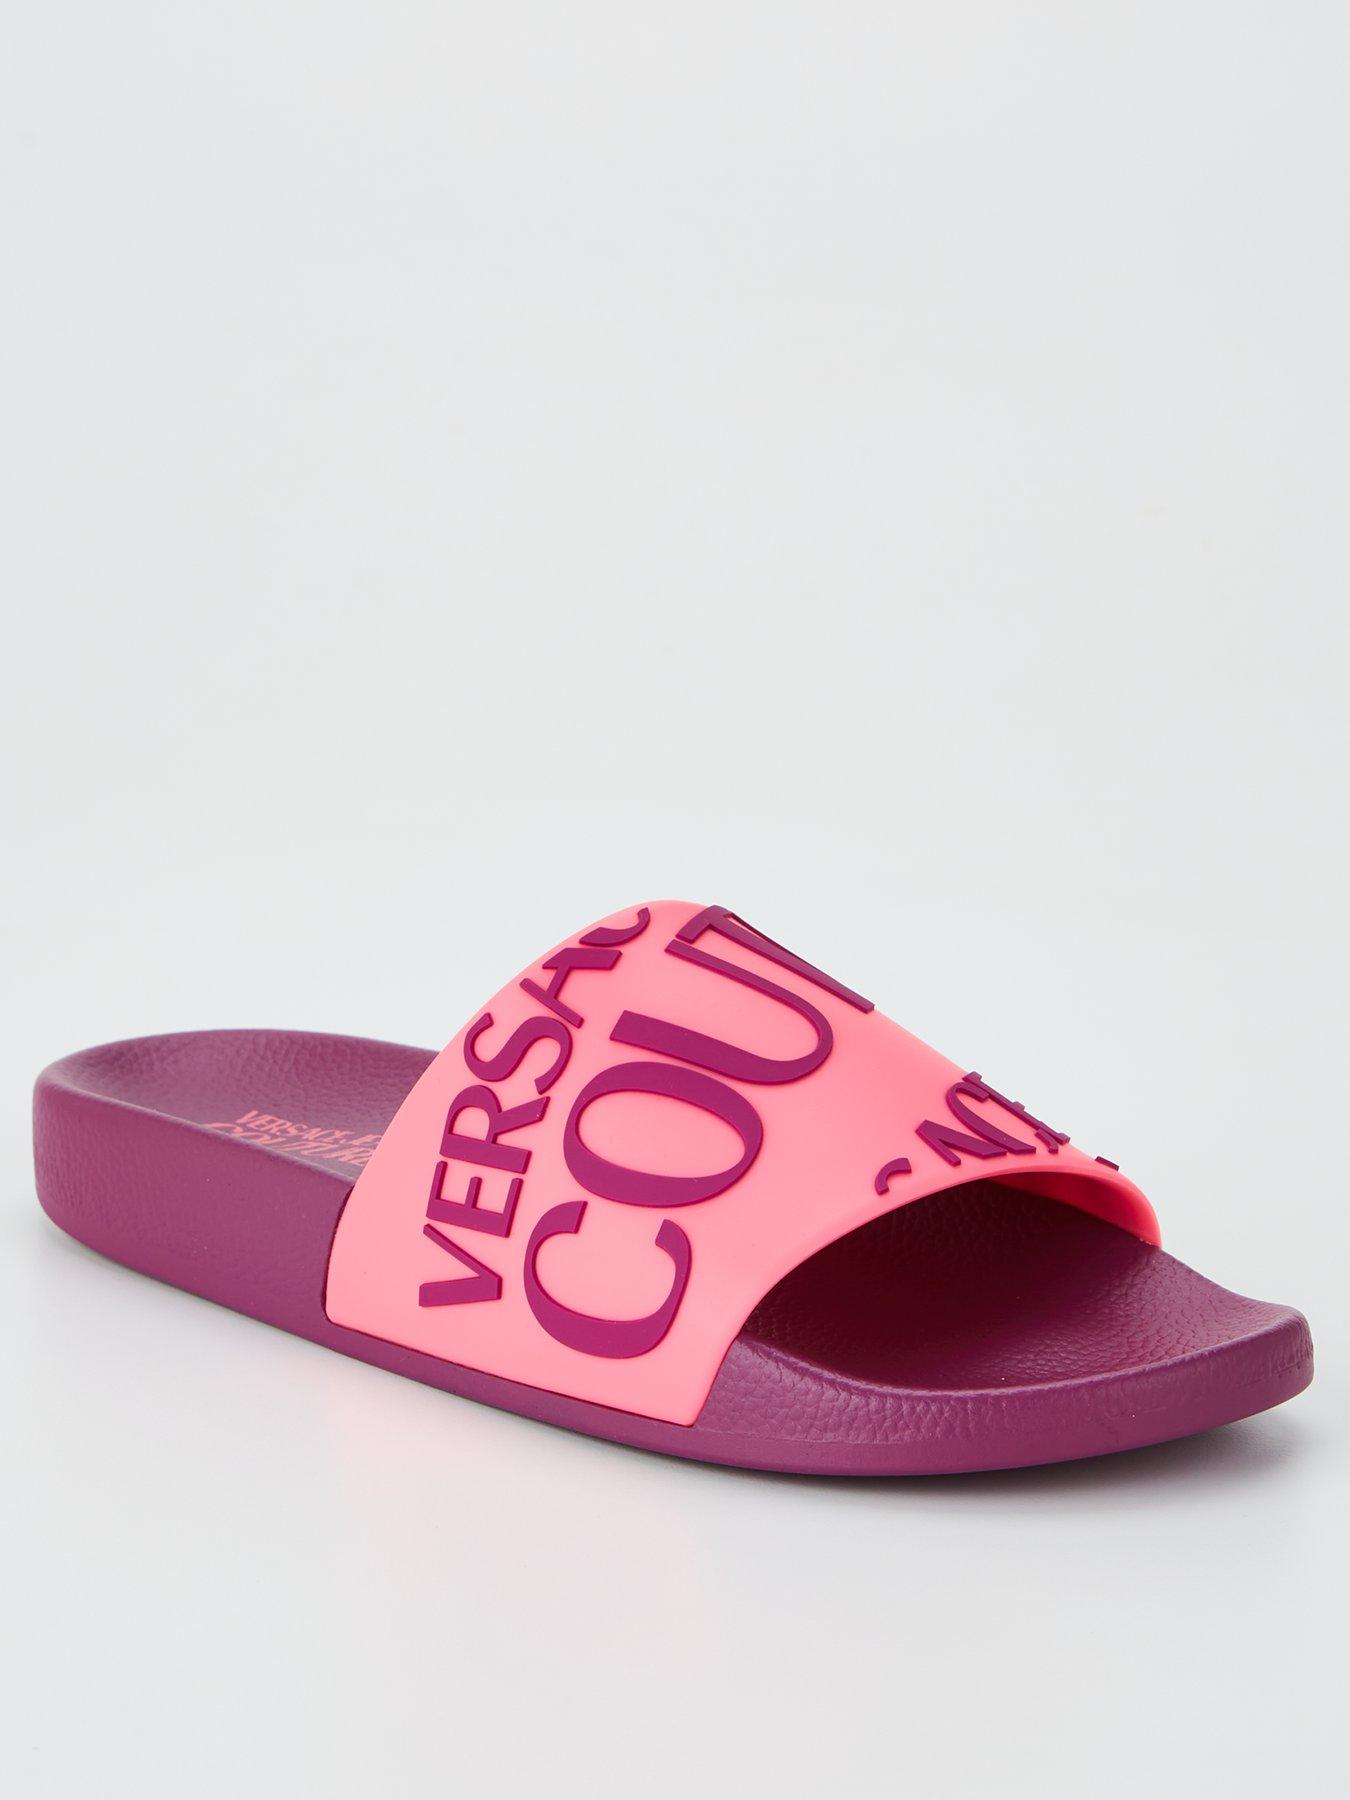 Versace thongs pink color buy on PRM